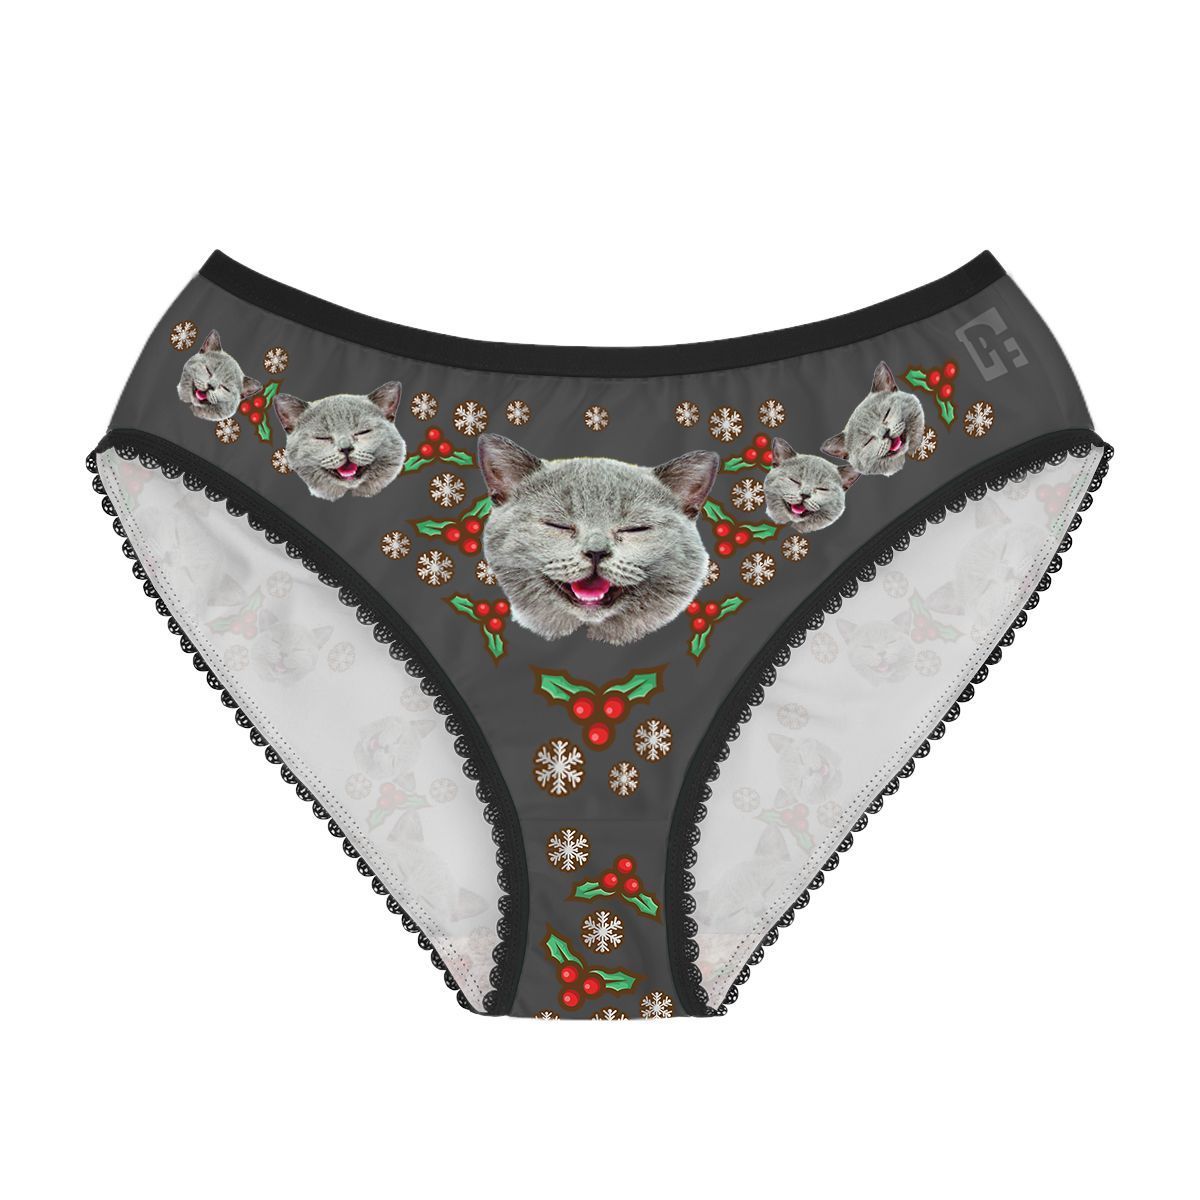 Dark Mistletoe women's underwear briefs personalized with photo printed on them